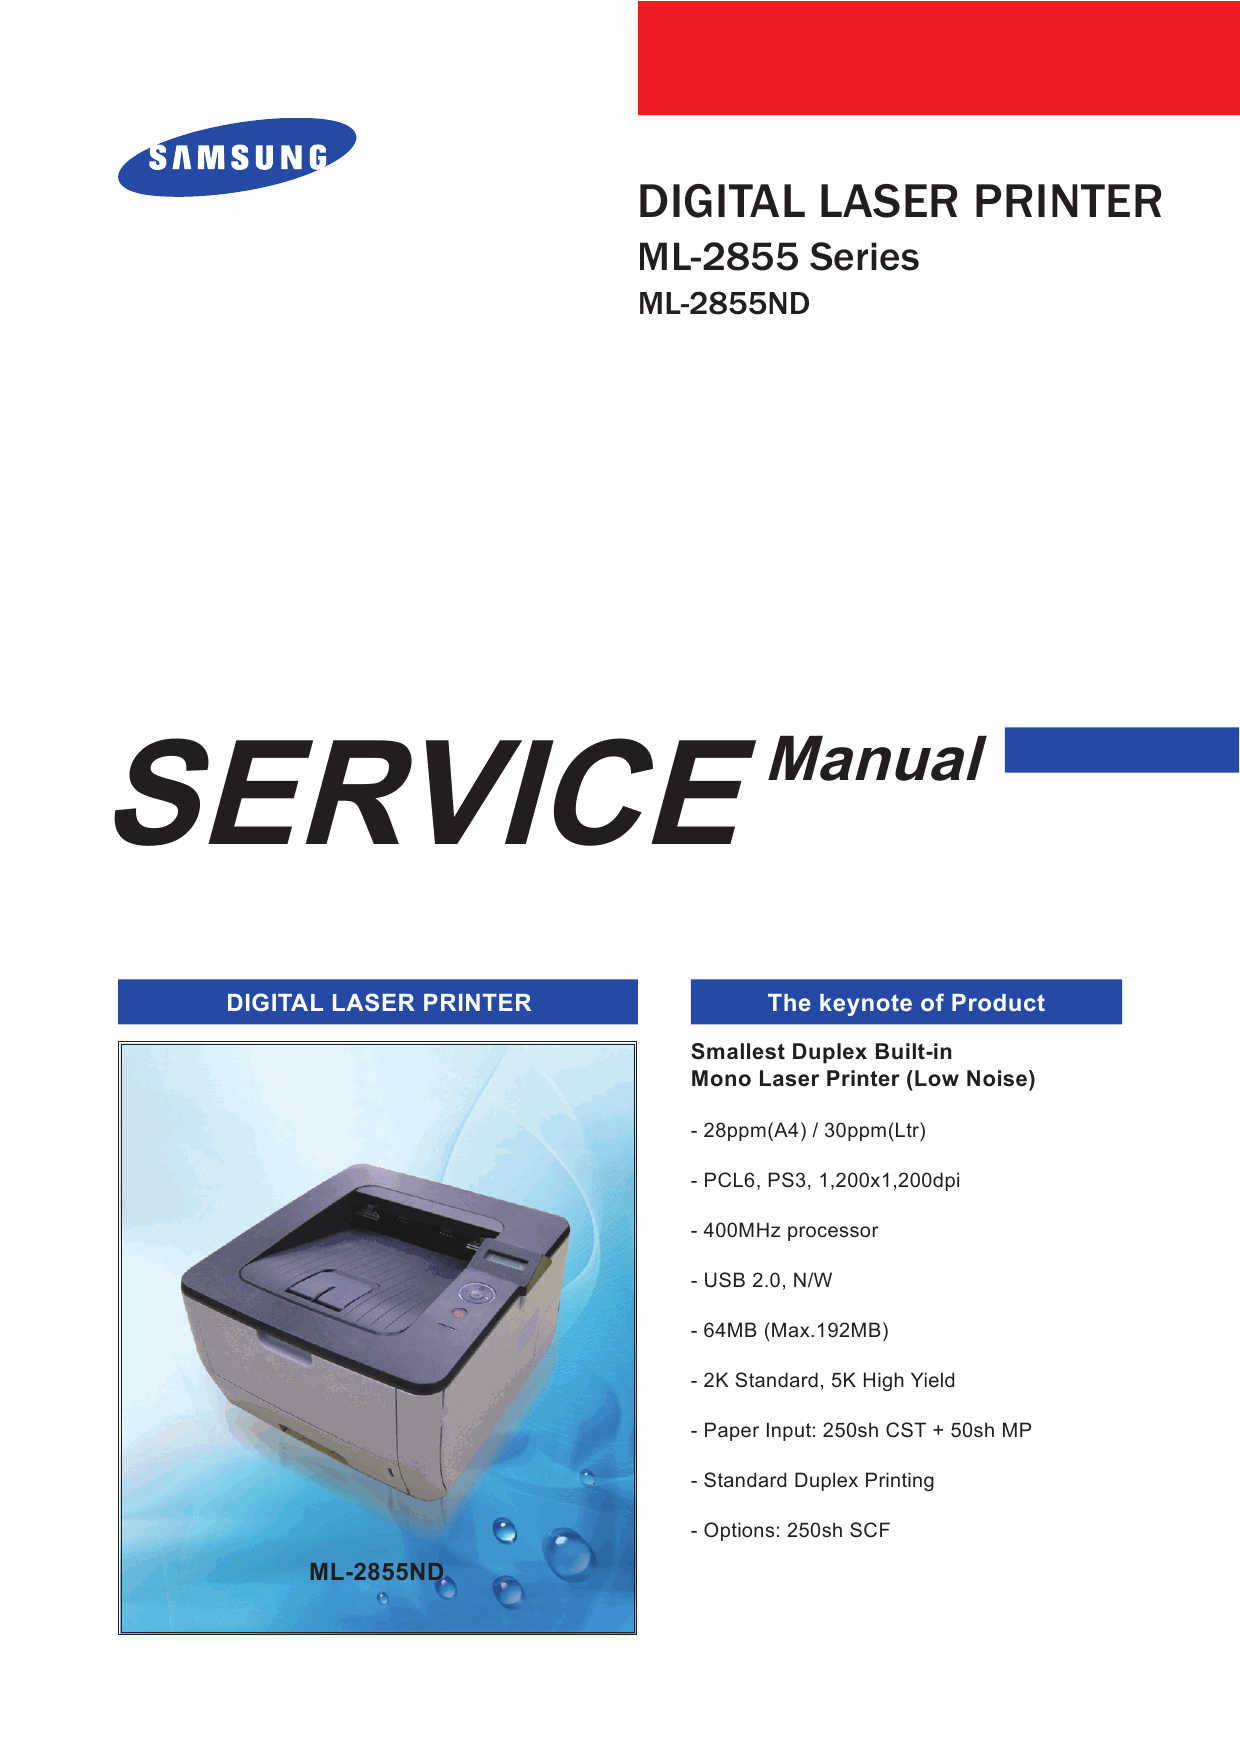 Samsung Digital-Laser-Printer ML-2855 2855ND Parts and Service Manual-1